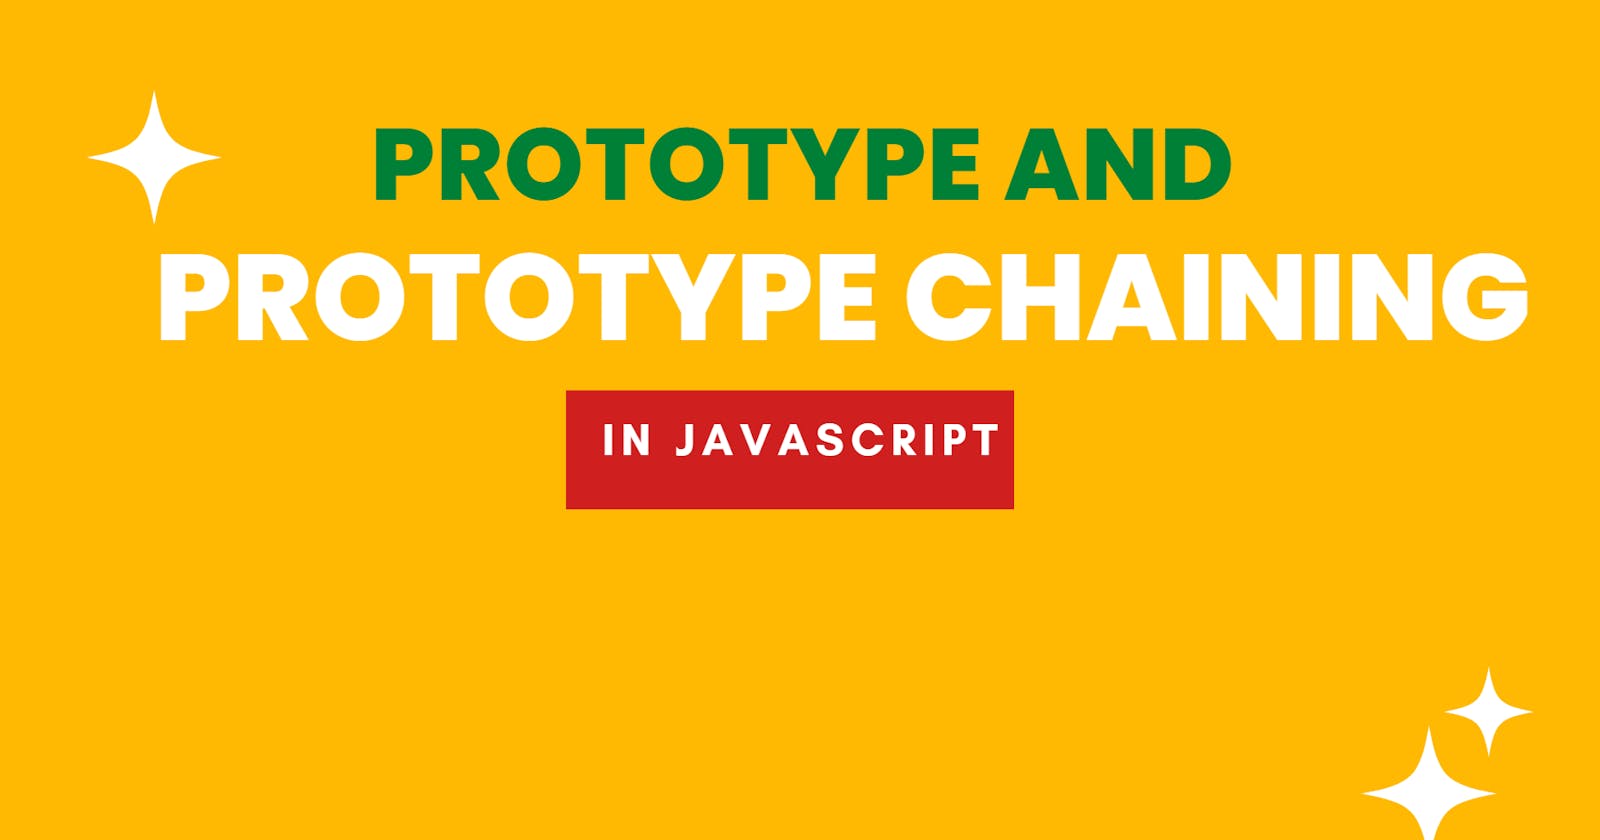 Prototype and Prototype Chaining in Java Script